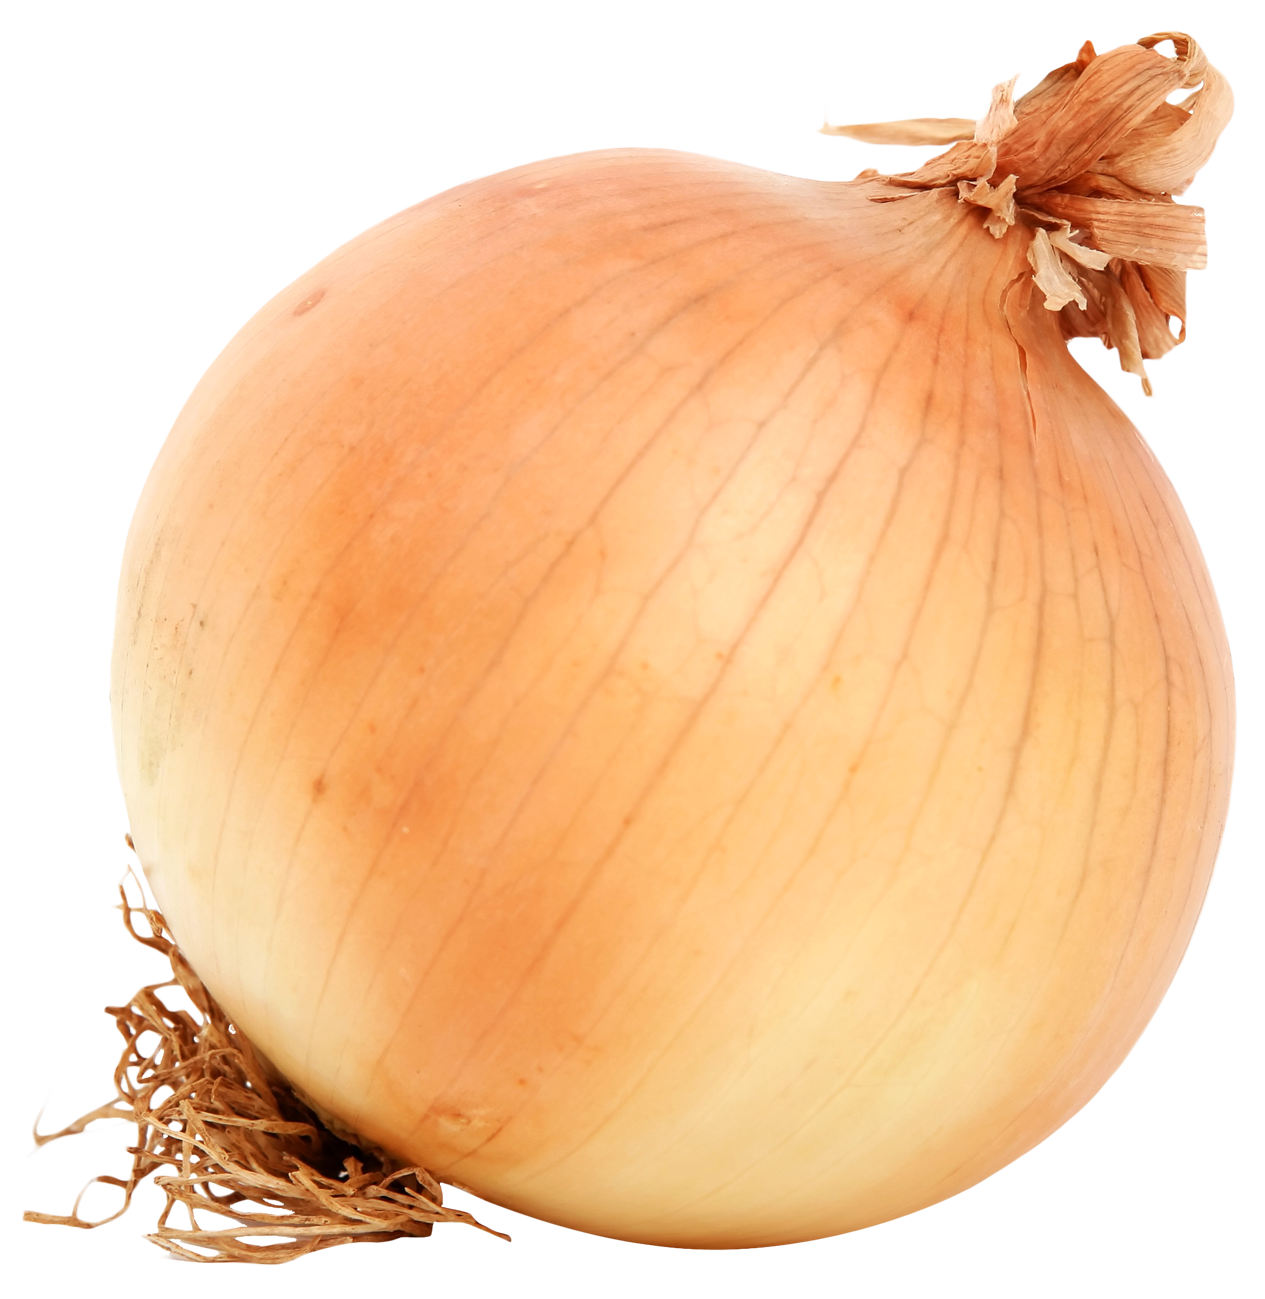 Slice Onion Png image #38756